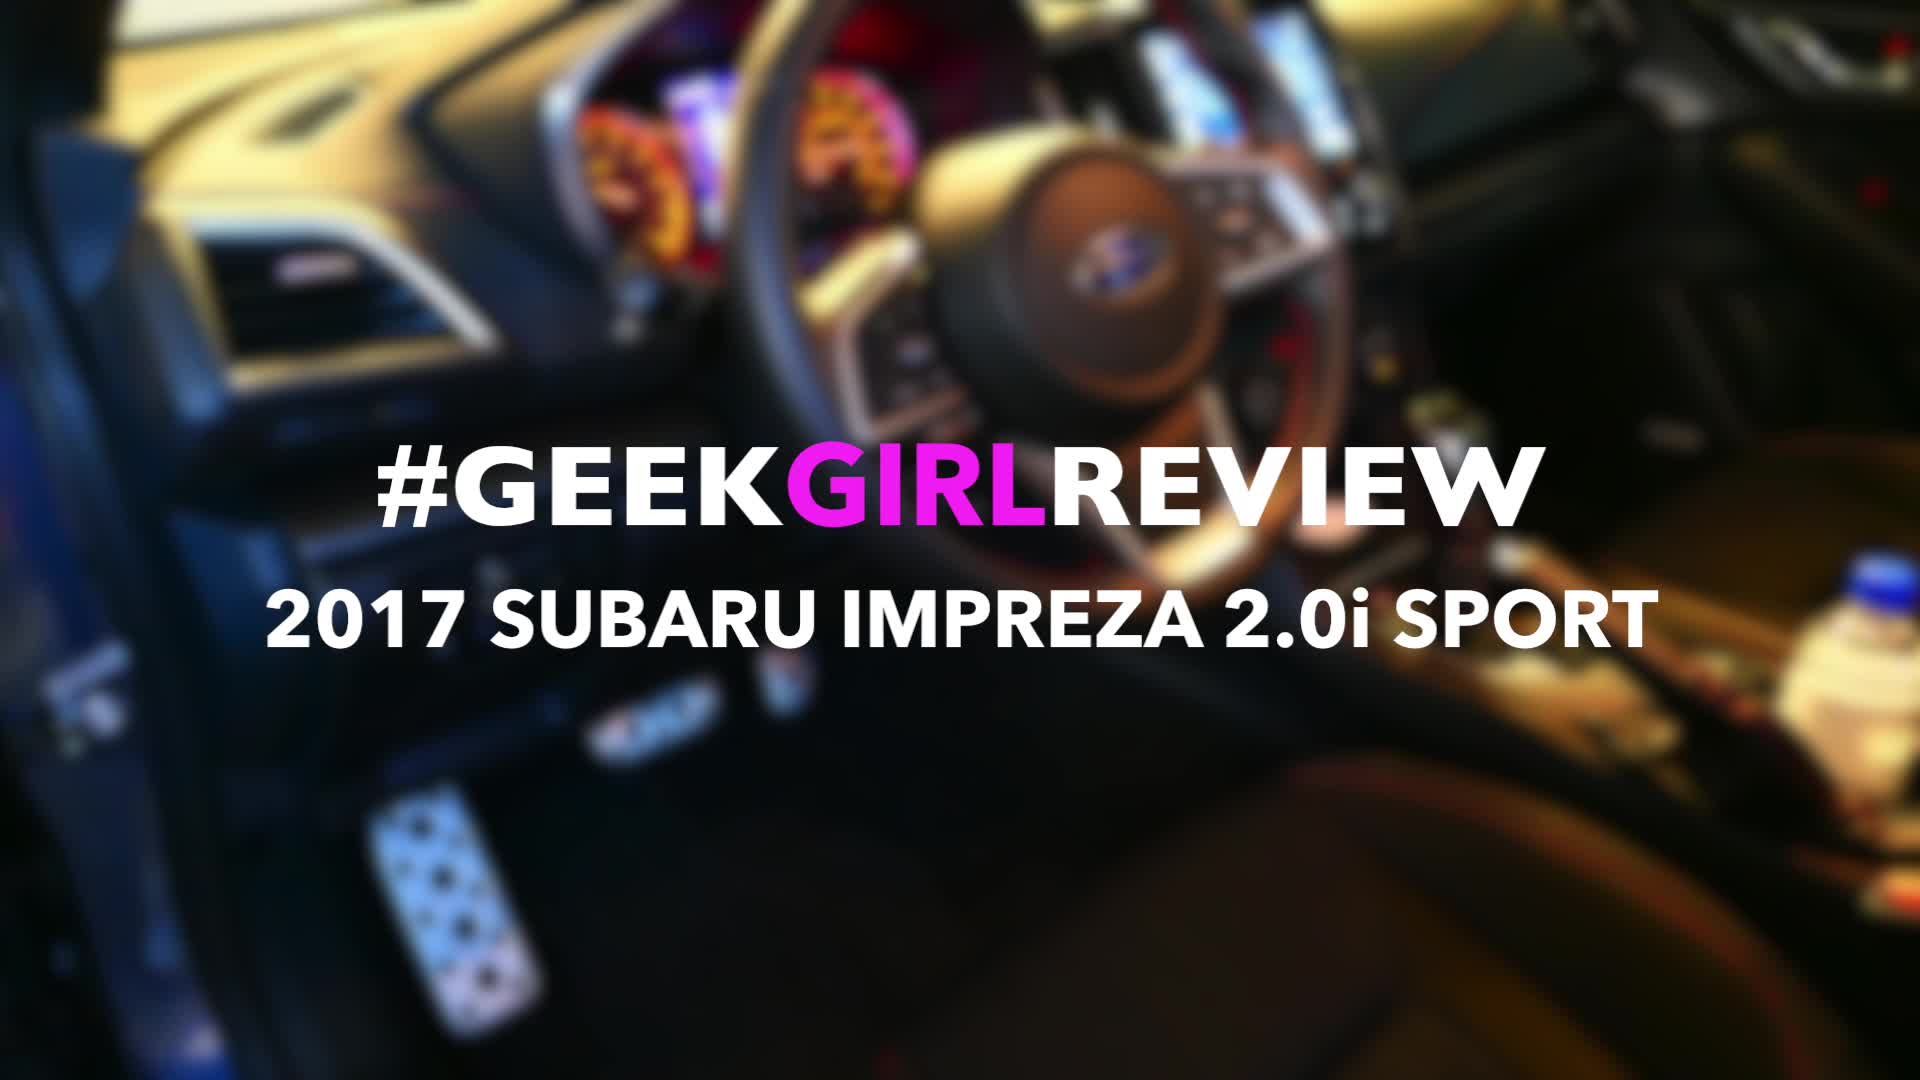 Tales of Emma: 2017 Subaru Impreza 2.0i Sport Geek Girl Review